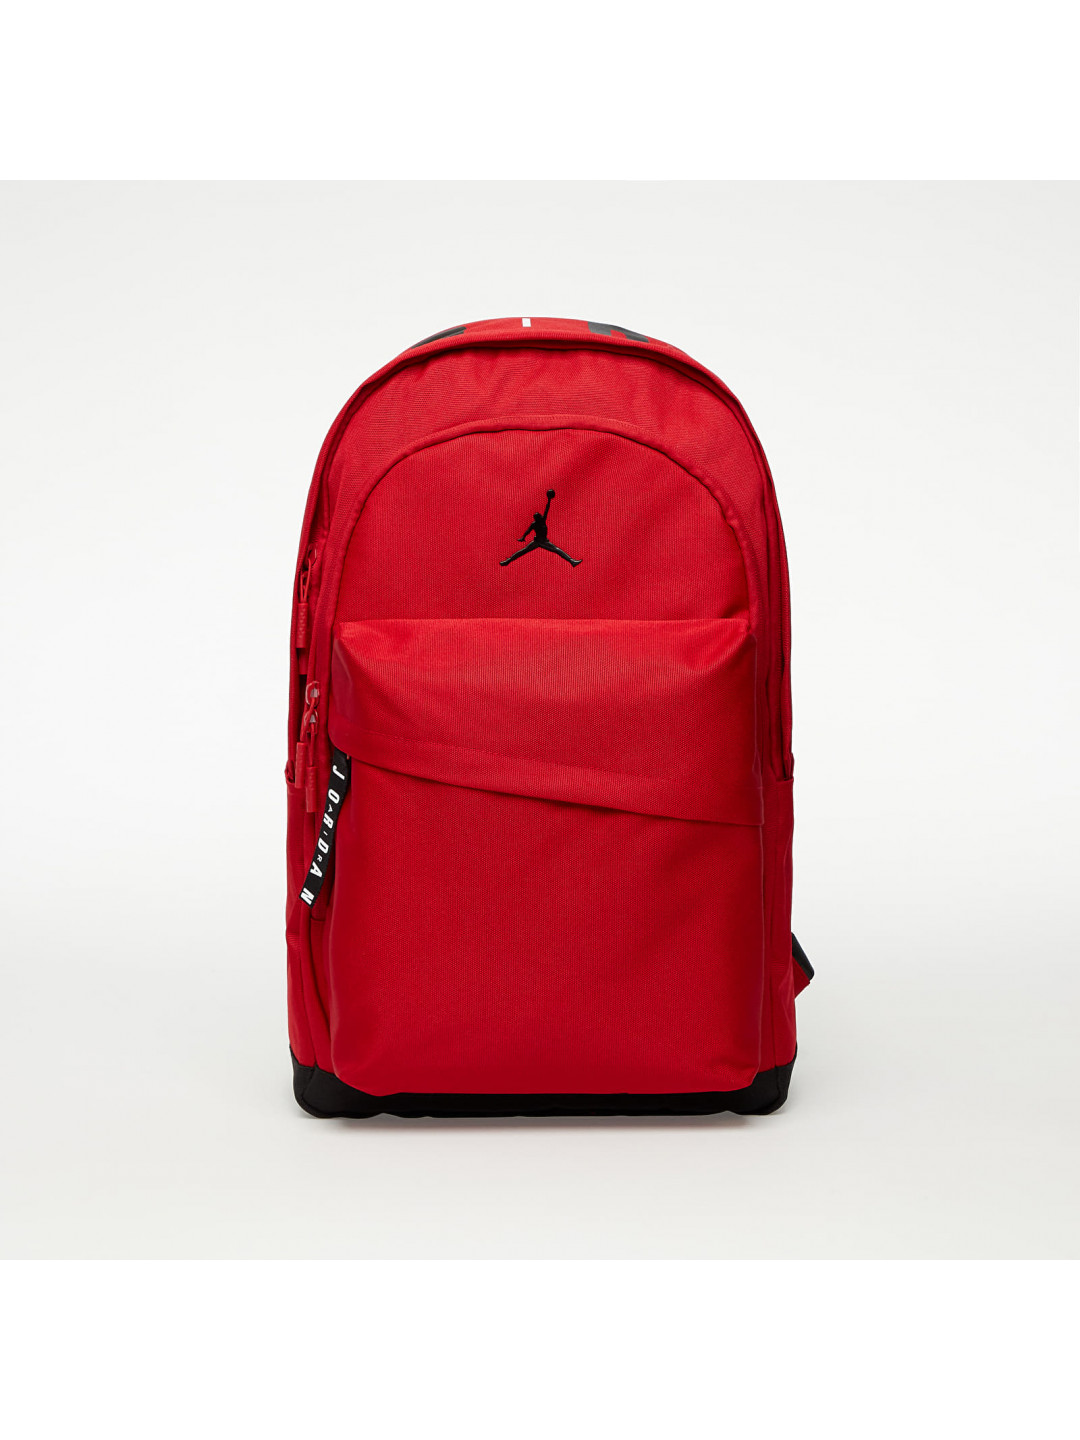 Jordan Air Patrol Backpack Red Black